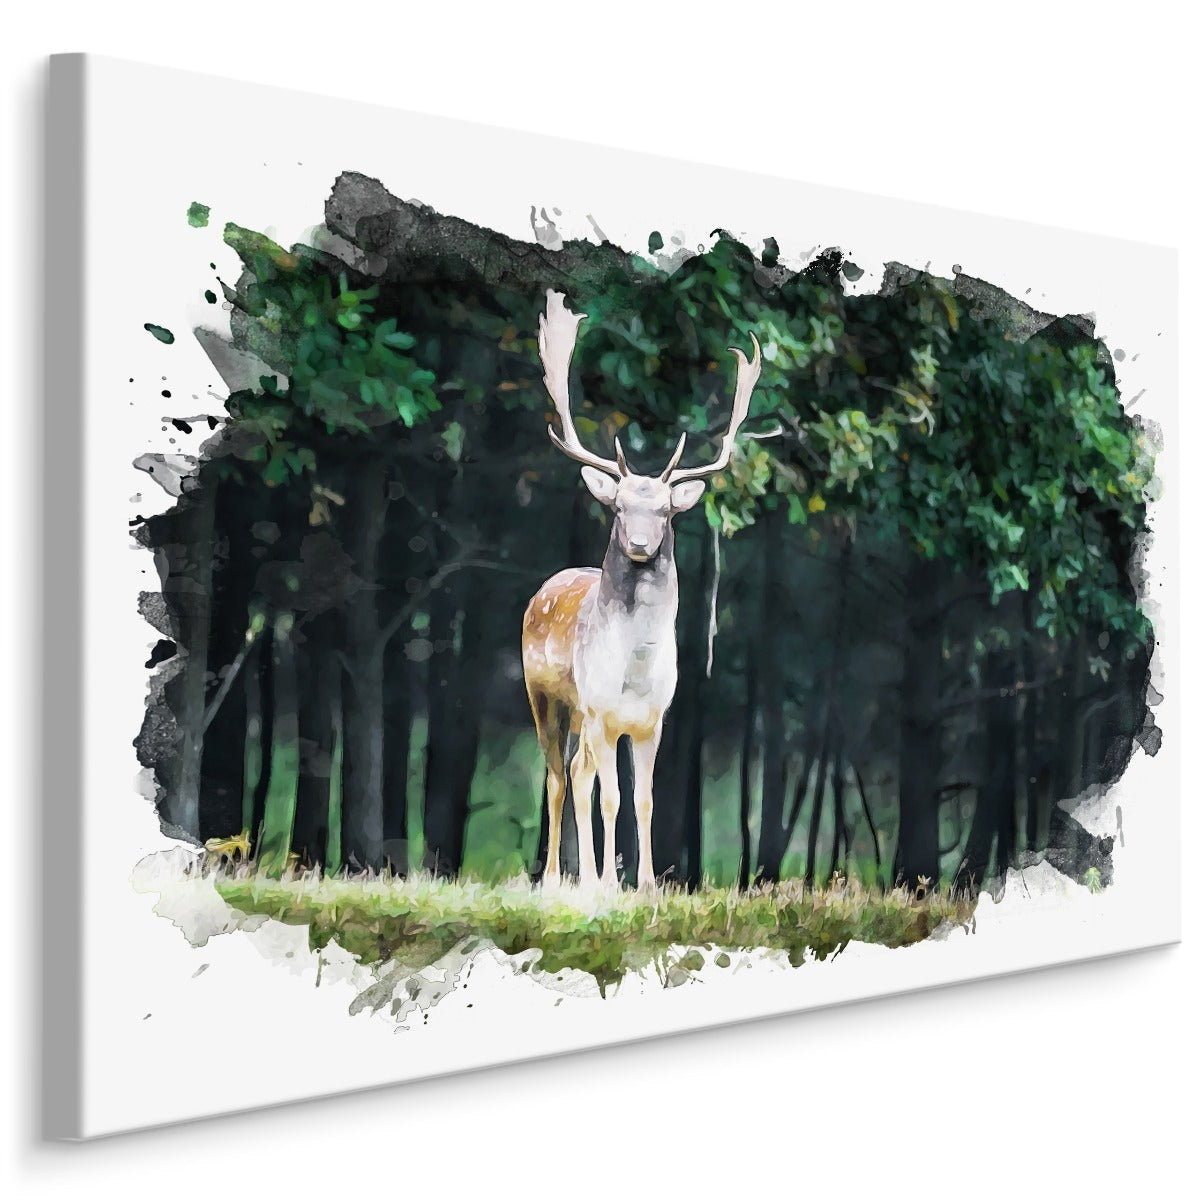 En hjort i skogen malt med akvarell